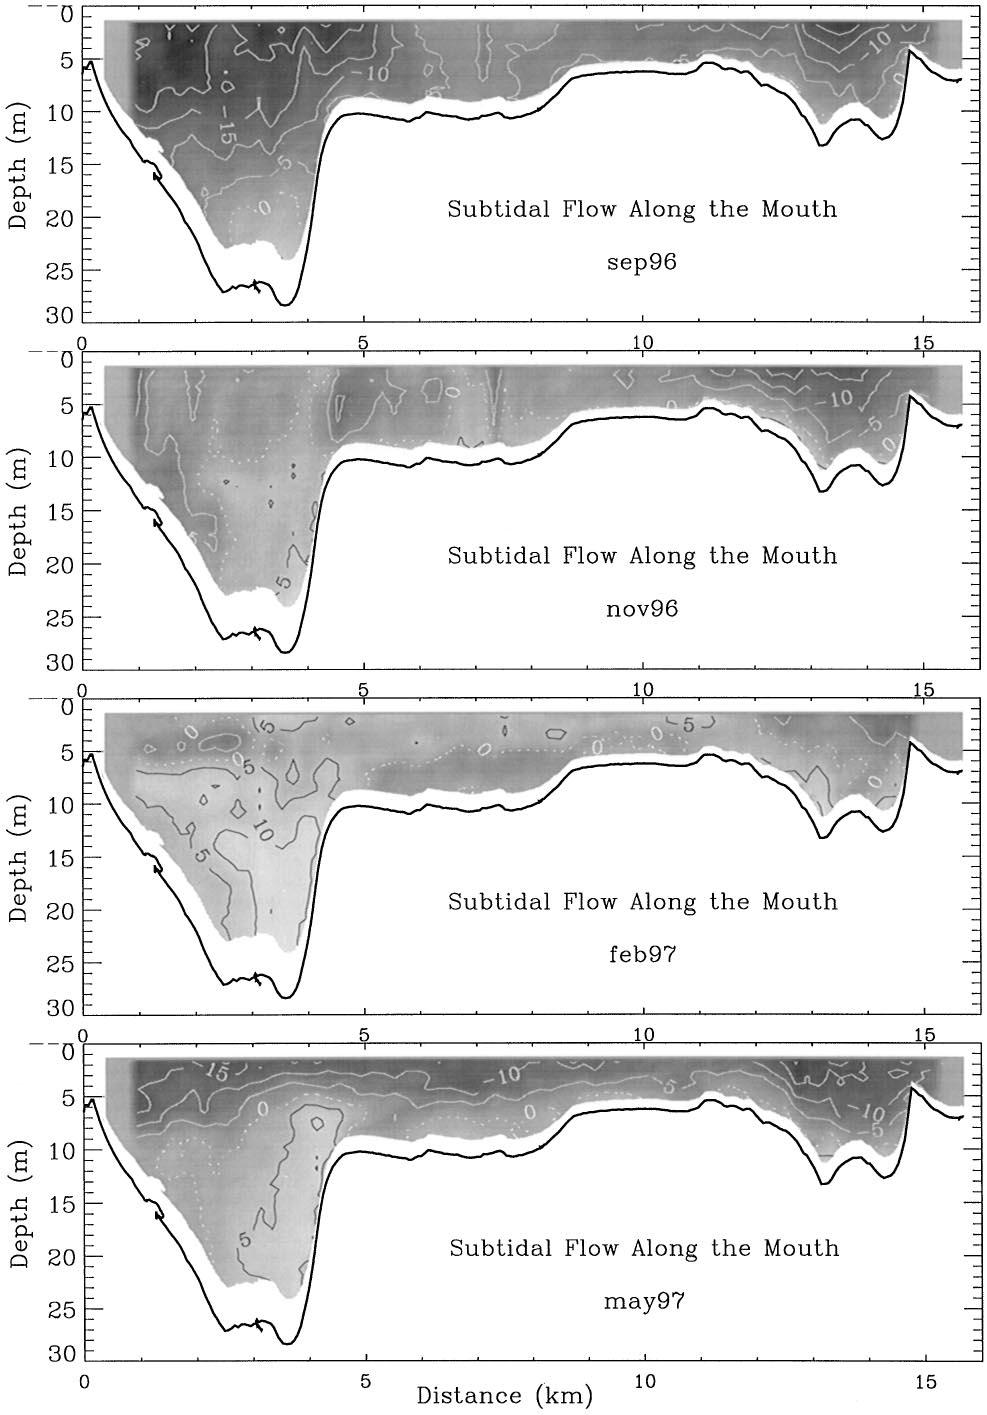 1172 A. Valle Levinson et al./continental Shelf Research 18 (1998) 1157 1177 Fig. 8.